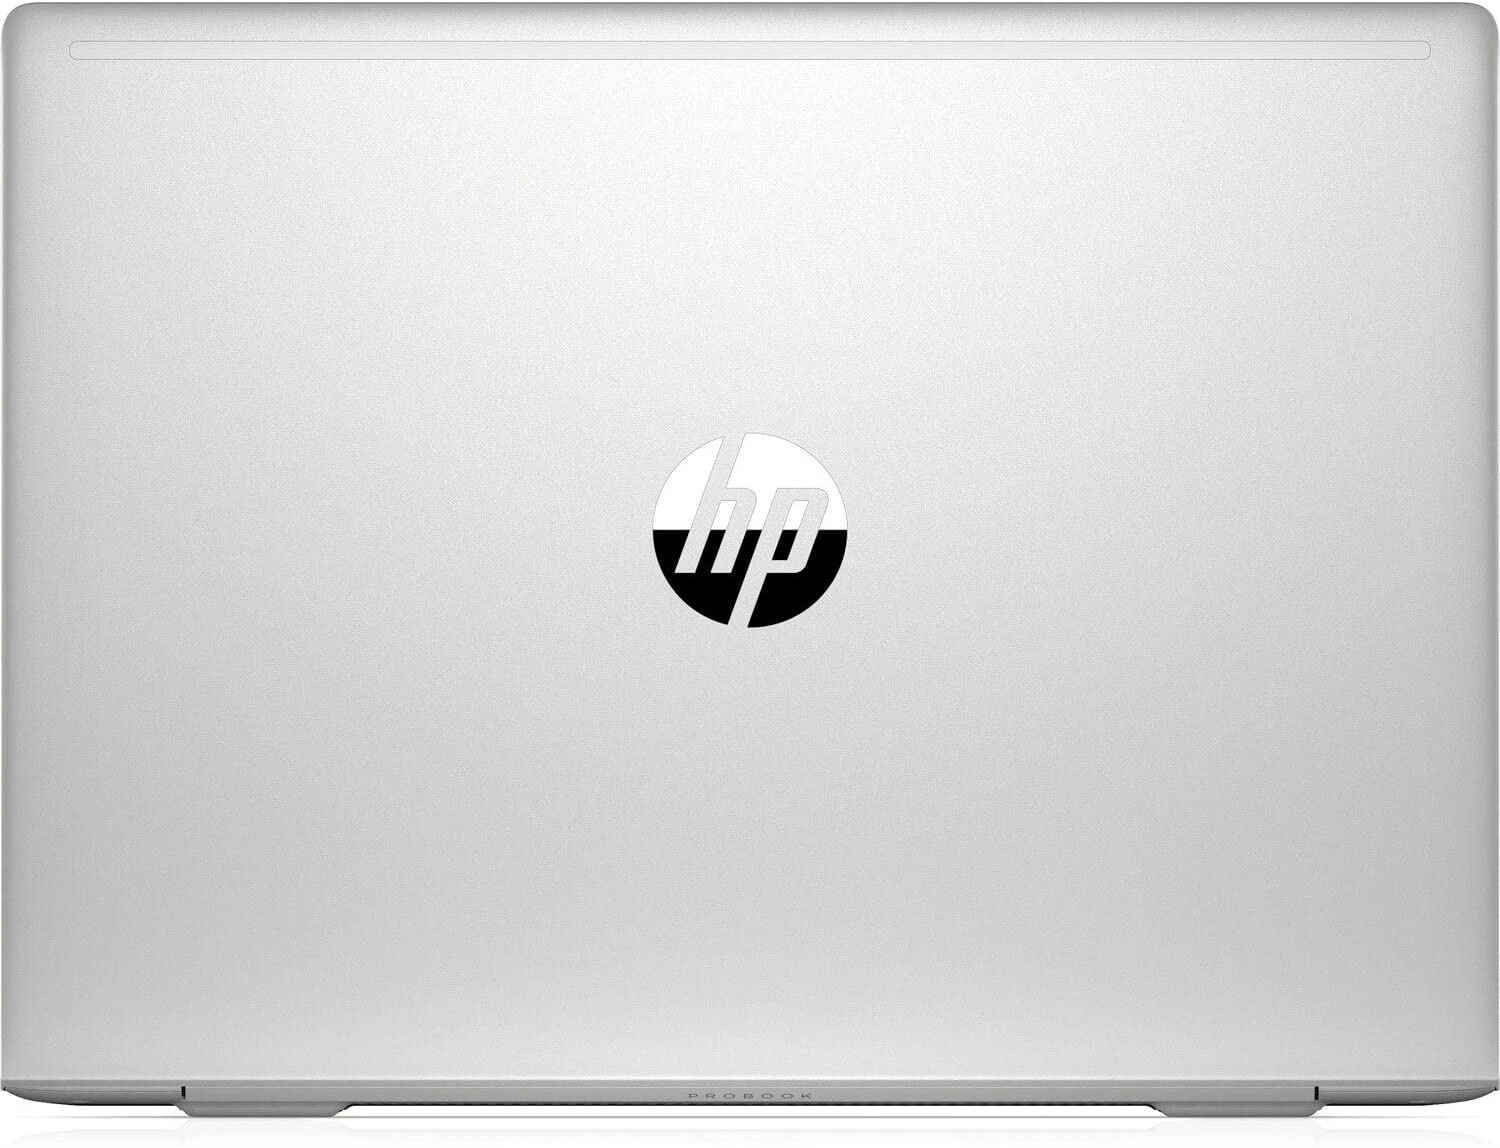 HP SBUY PB440G7 laptop image